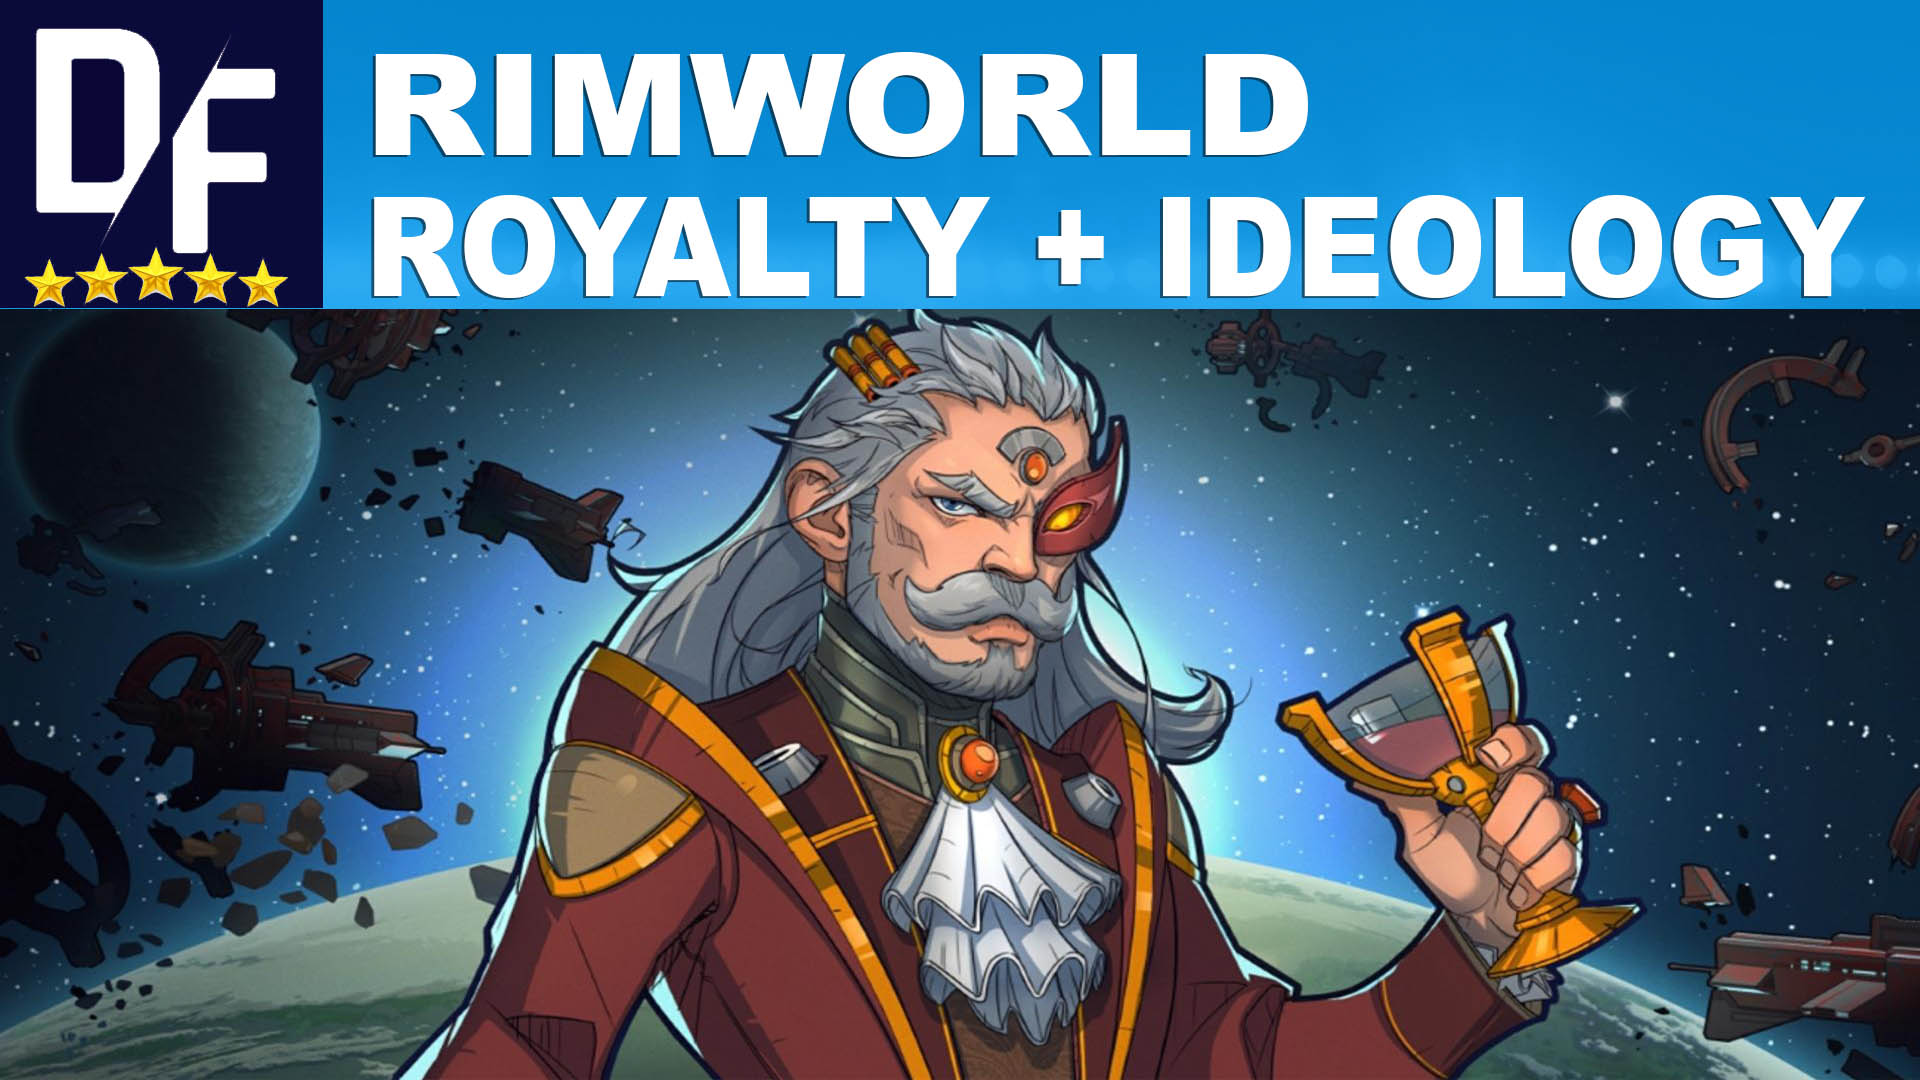 🤴 RimWorld +Royalty+Ideology+Biotech [STEAM] Аккаунт